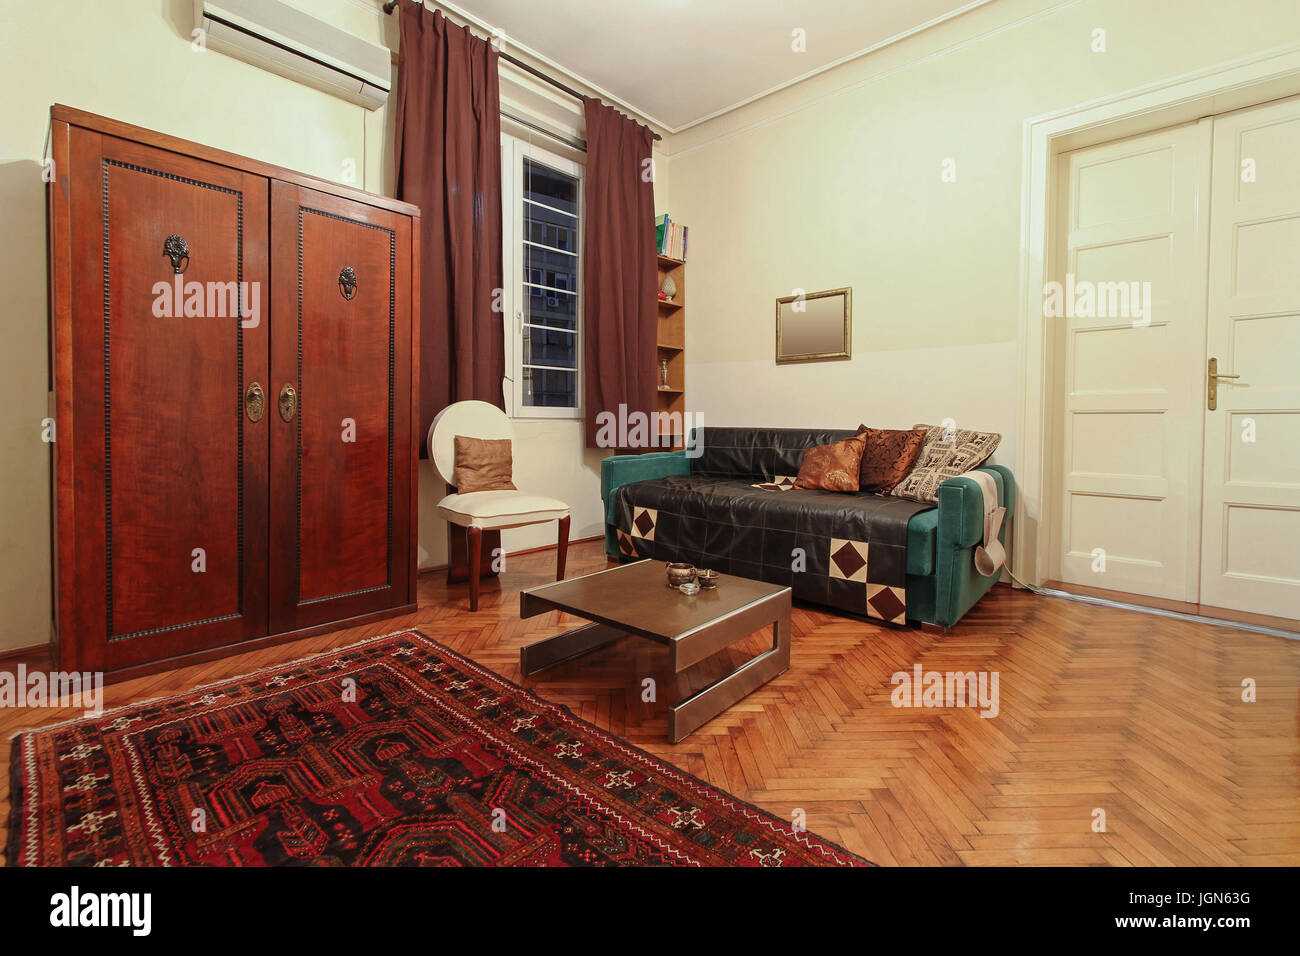 Retro style furniture in old home interior Stock Photo